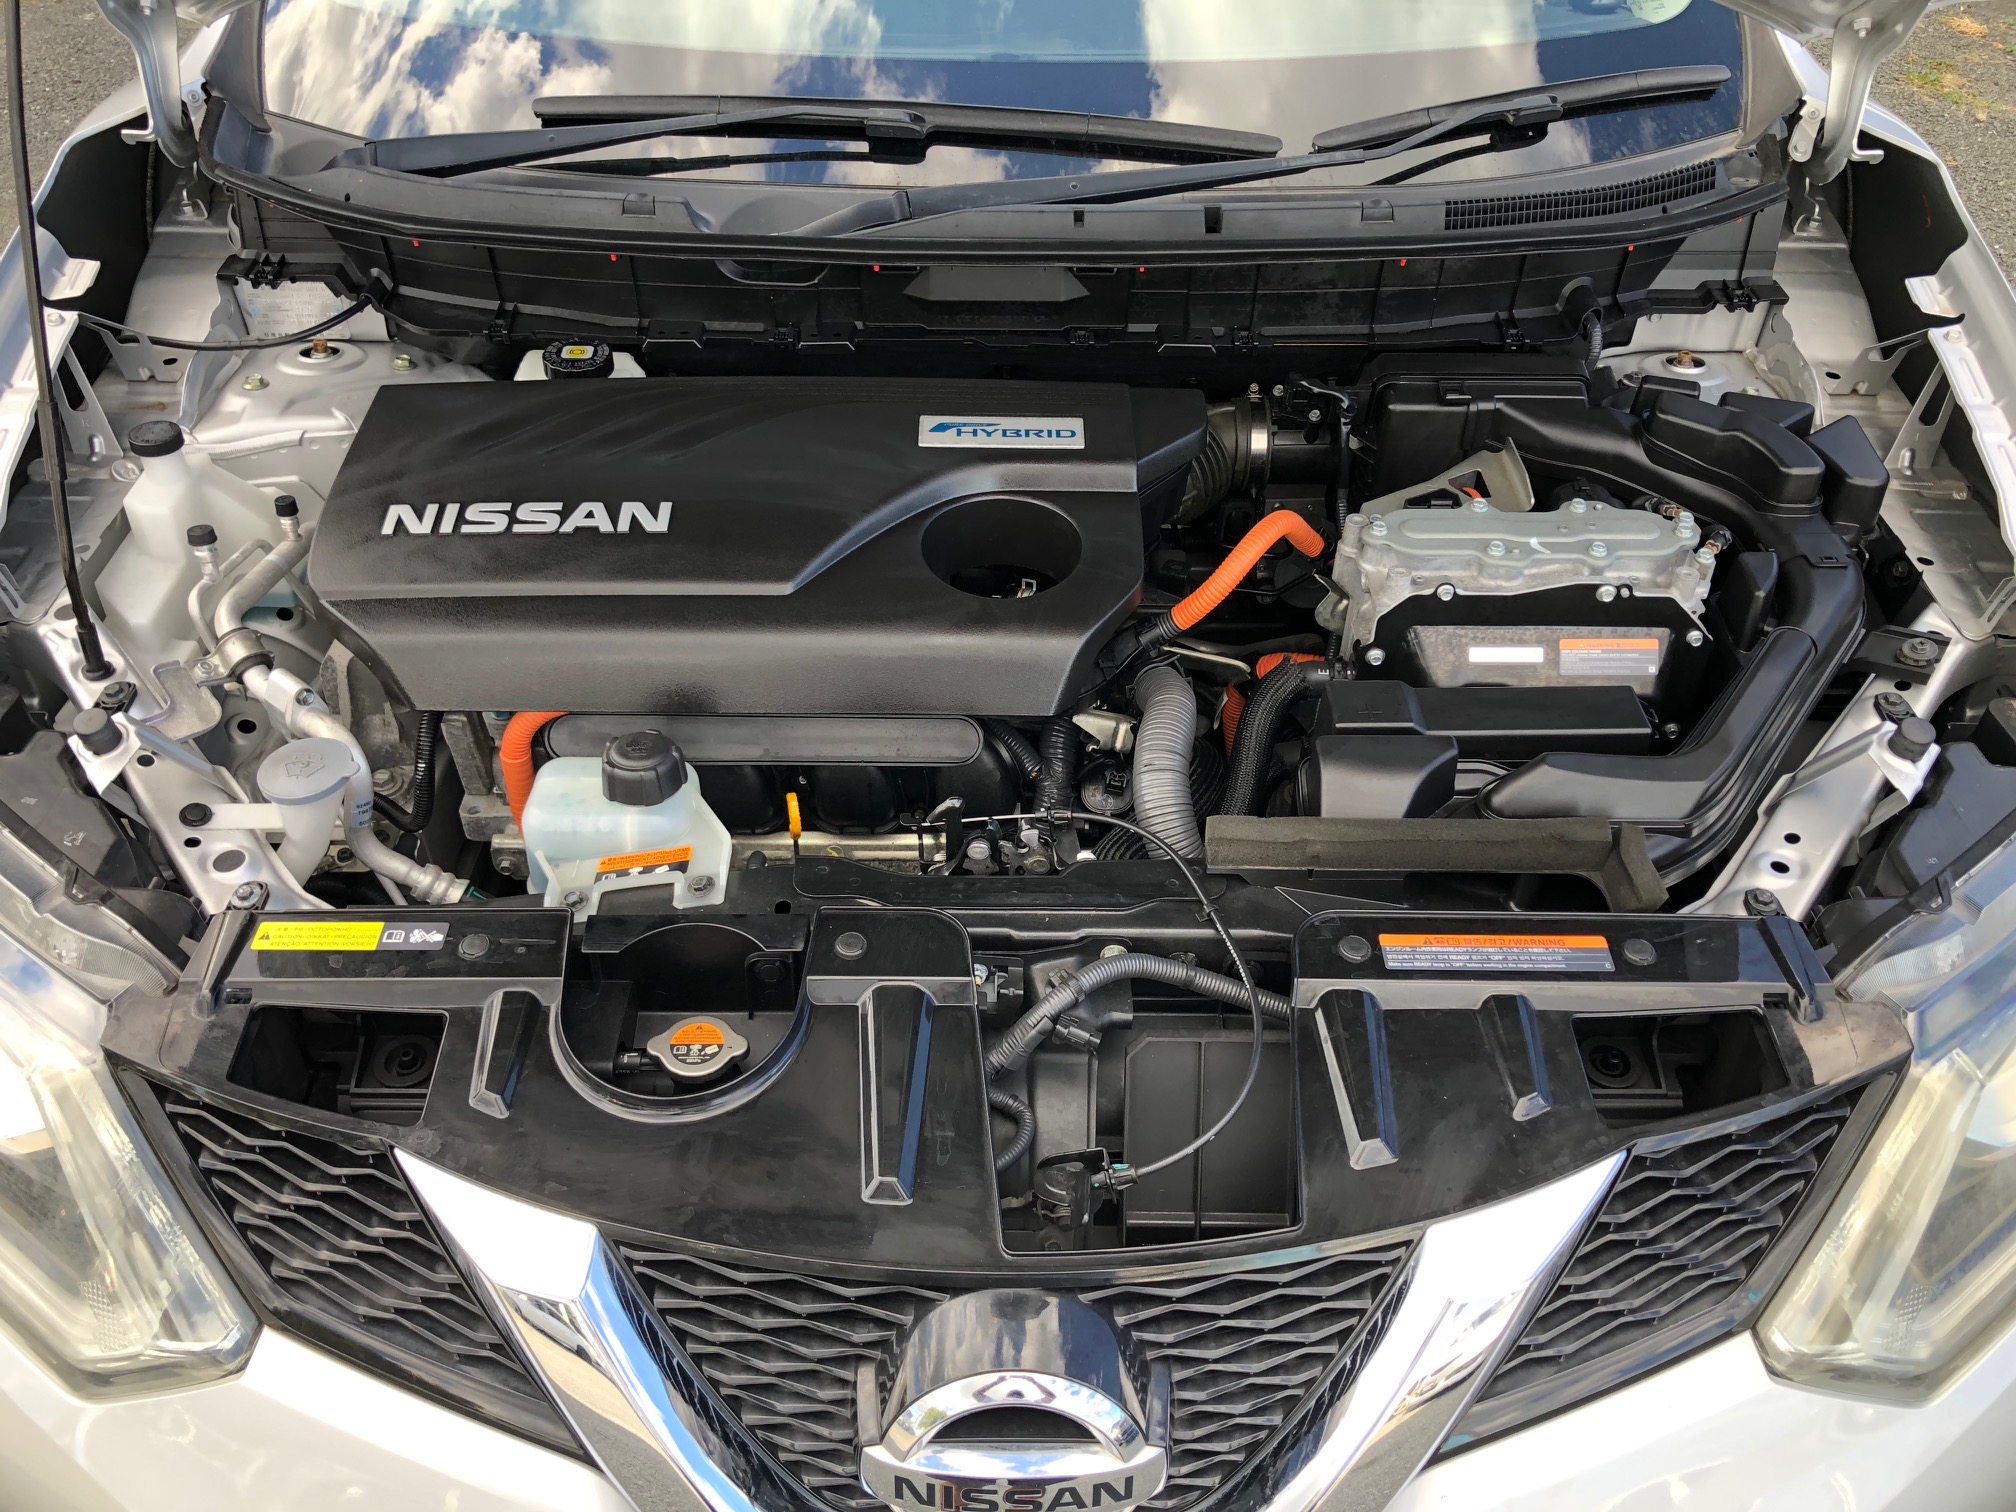 Nissan X-trail 2015 Image 6